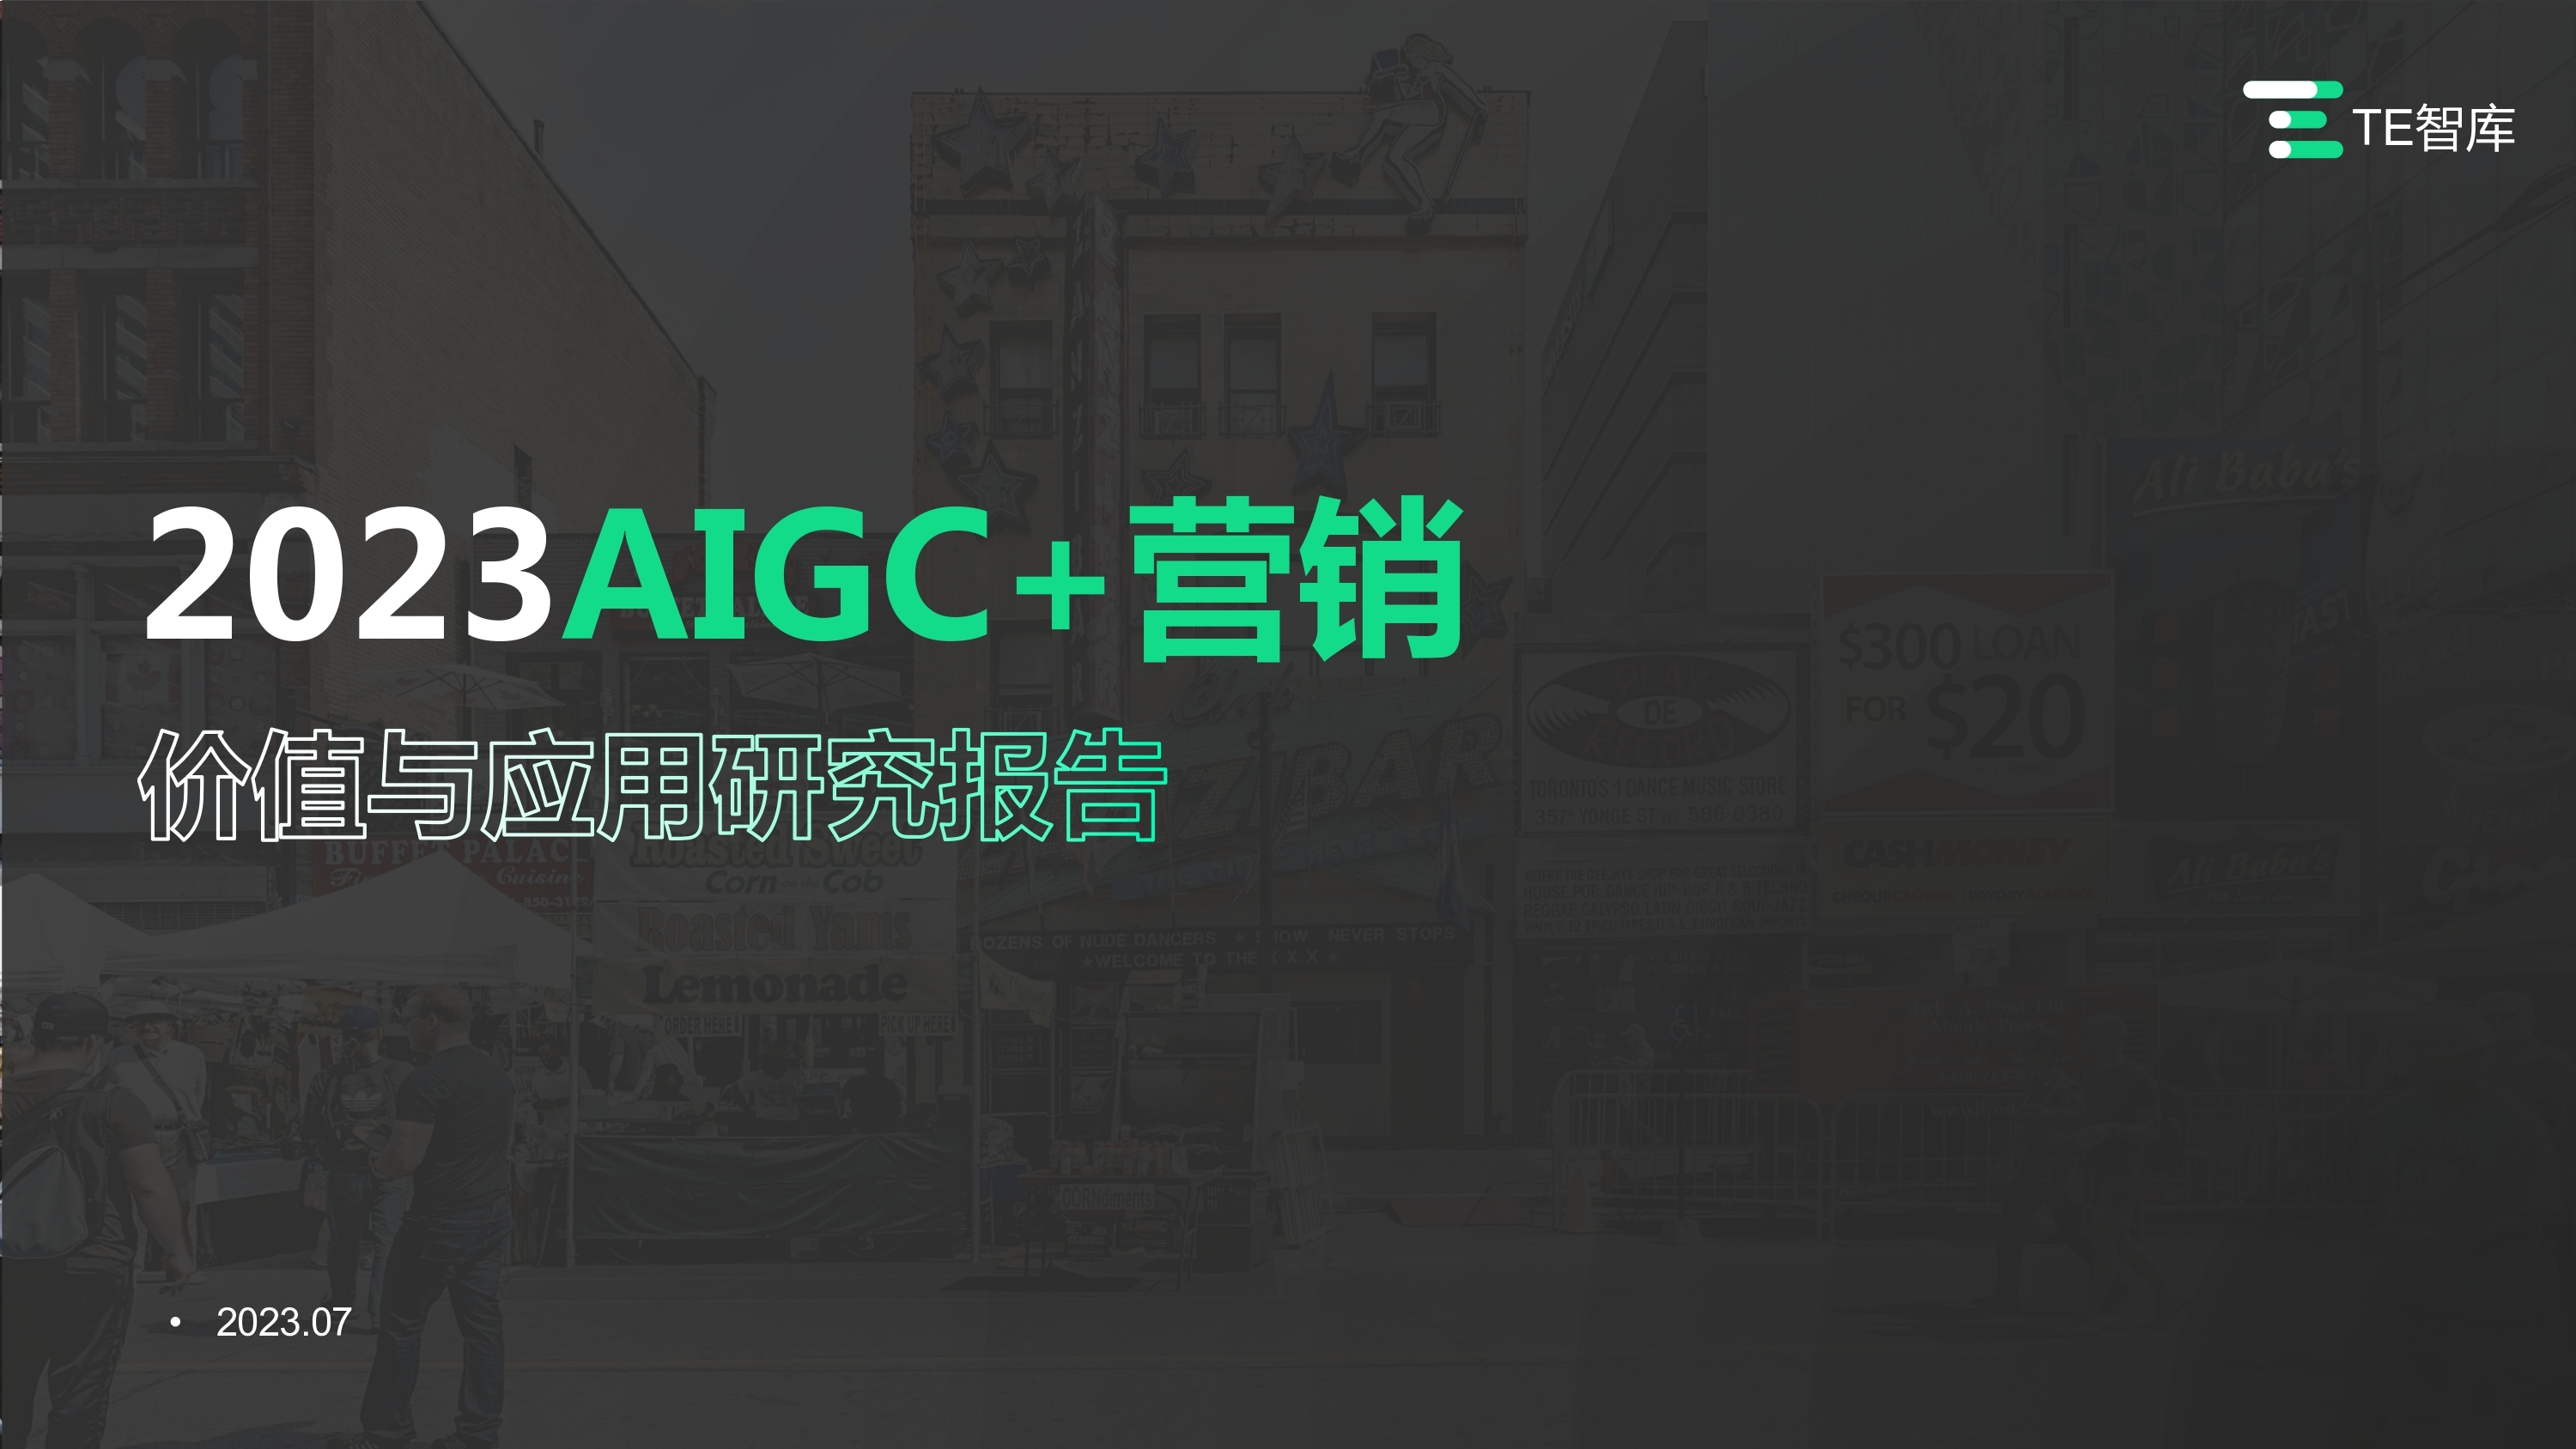 TE智库｜《2023中国营销+AIGC市场研究报告》，解读首个被AIGC深度影响的场景